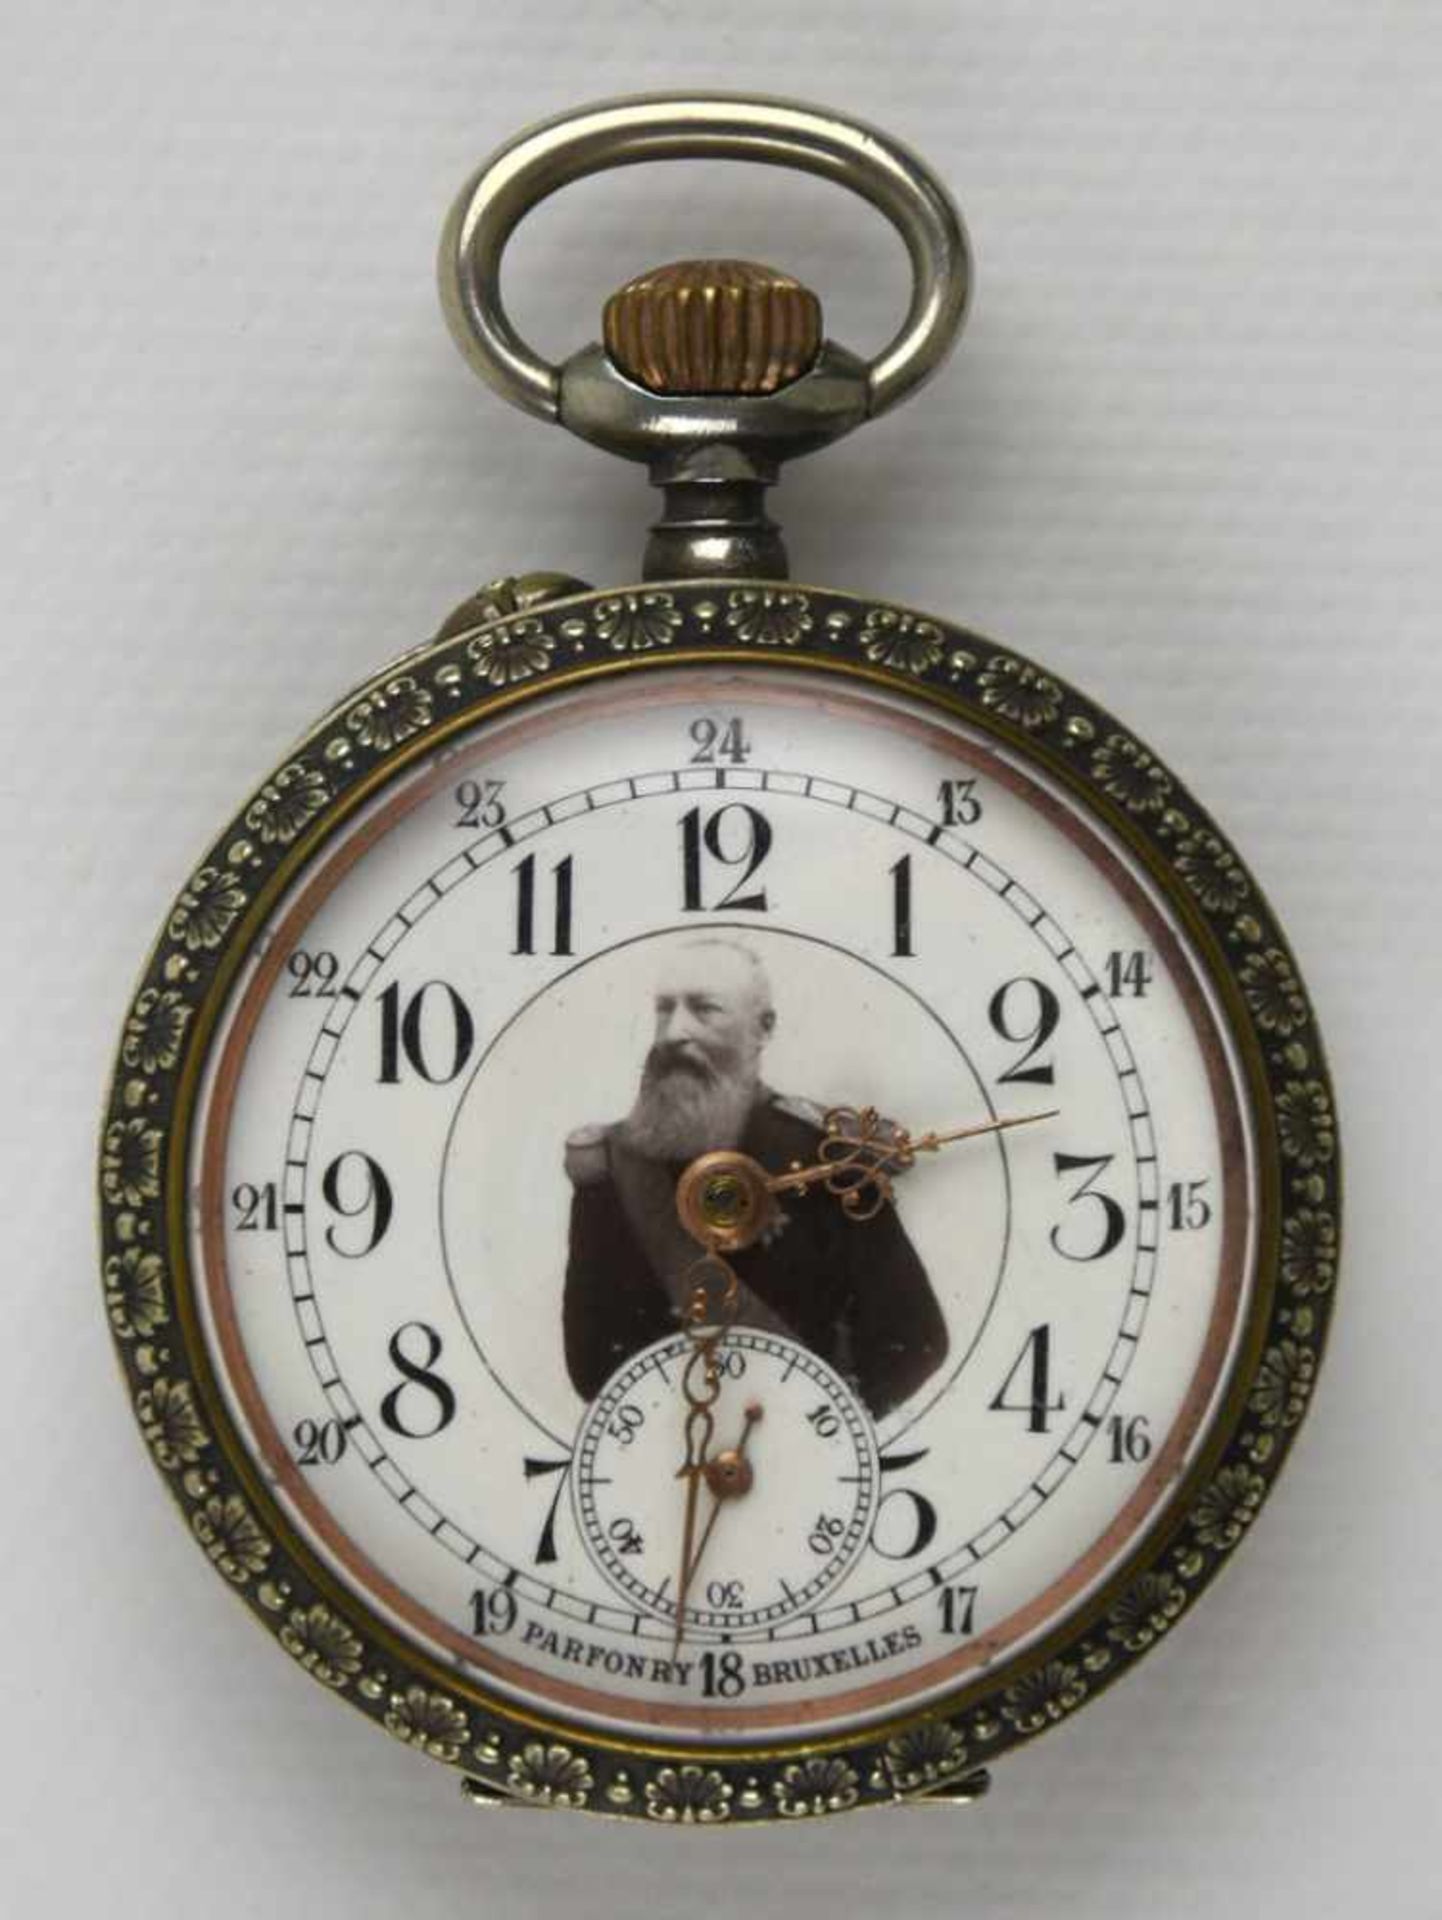 Belgium - Pocket watch with King Leopold II's effigy - Shooting prize 1902 PARFONRYBelgique - Montre